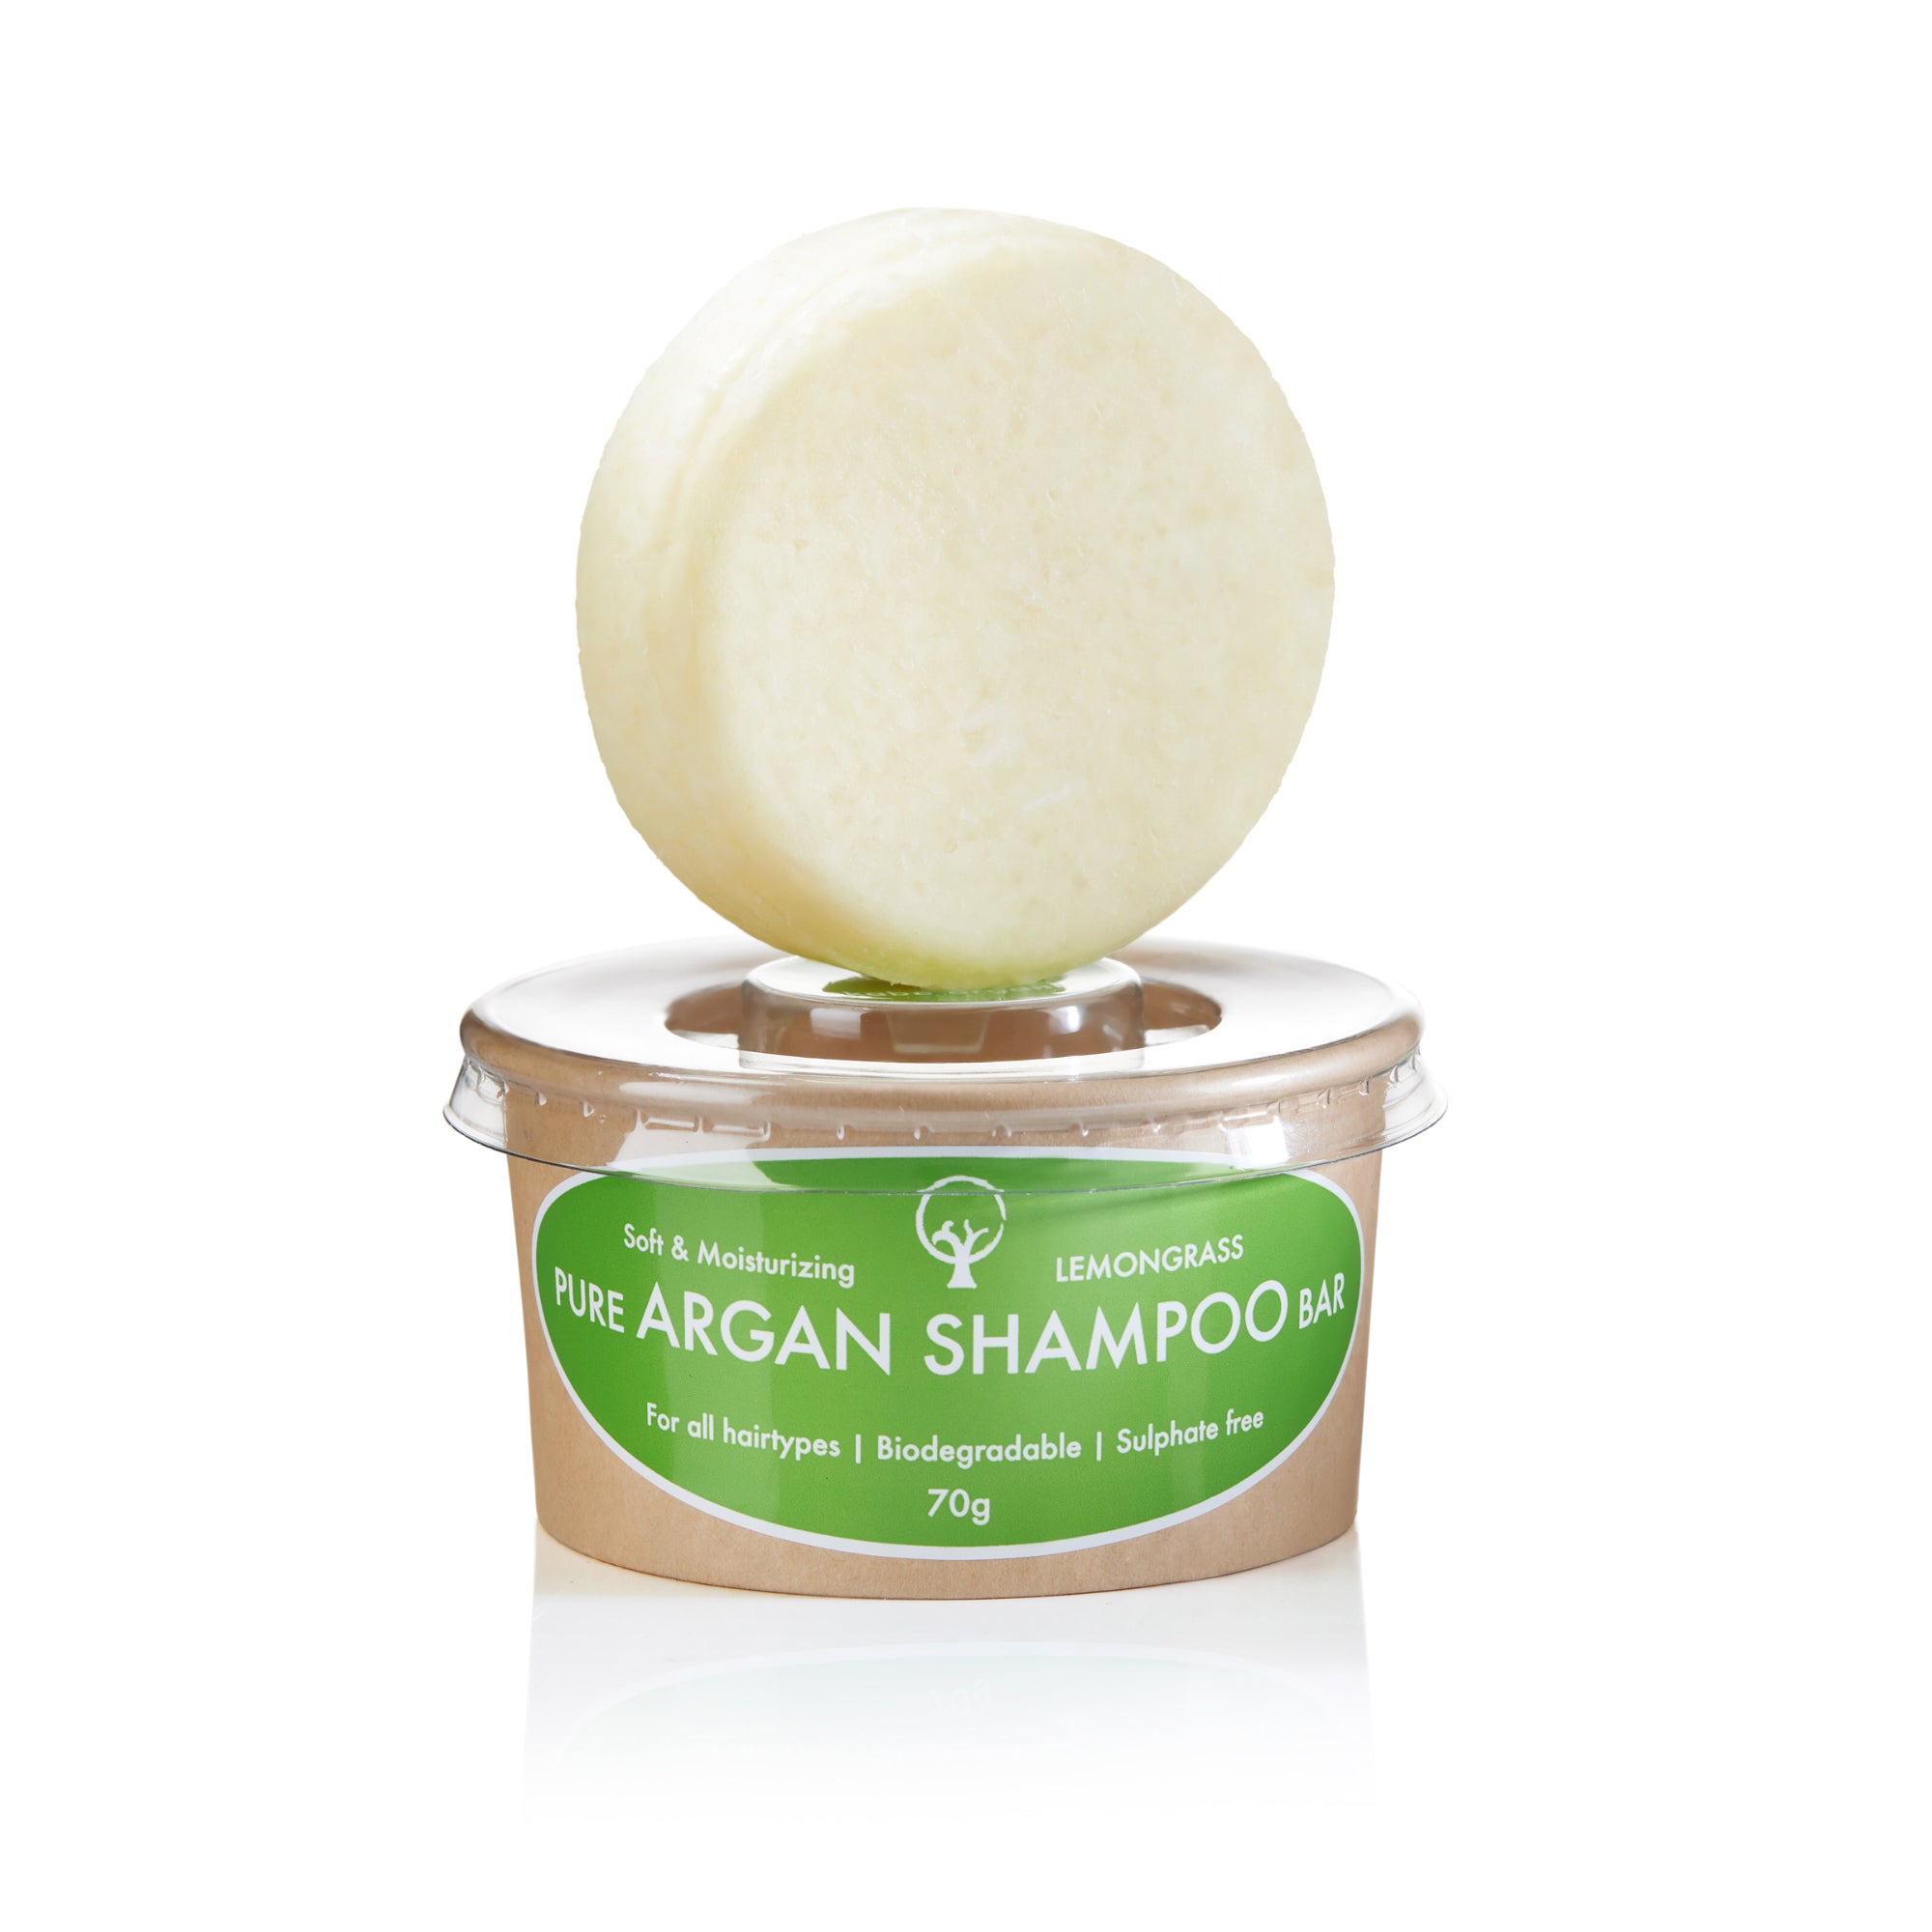 Moisturizing Argan Shampoo Bar with Lemongrass Scent, 70 g